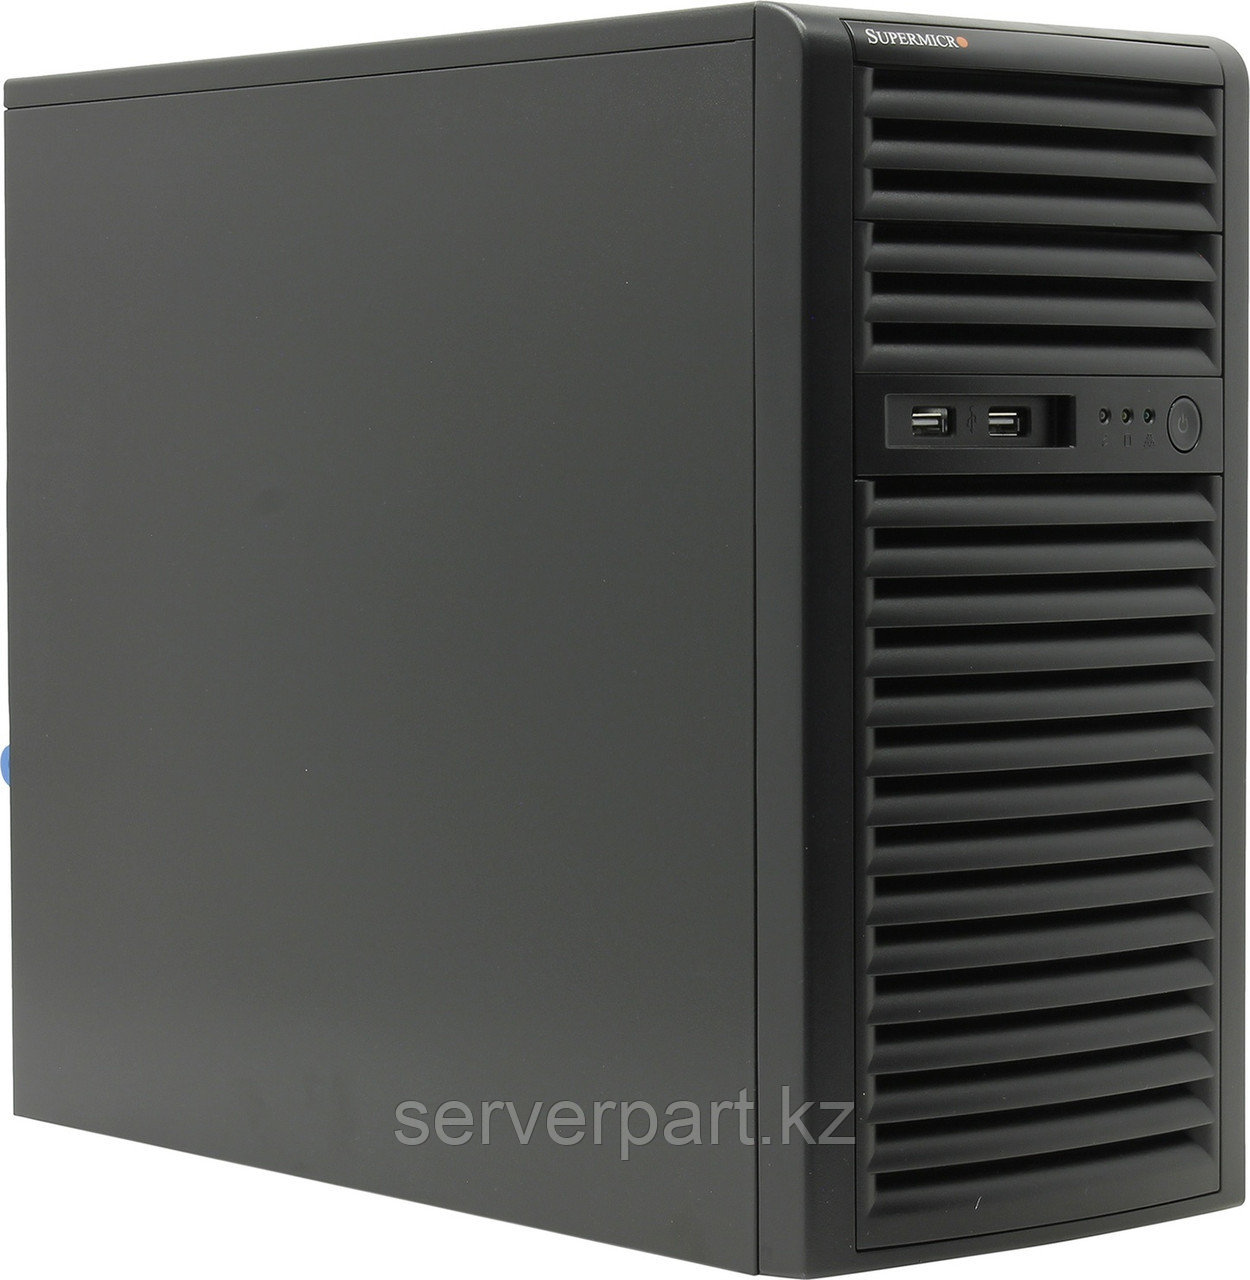 Сервер Supermicro SYS-5039C (Tower 4LFF)/4-core intel xeon E2224 (3.4GHz)/32GB UDIMM nECC, фото 1